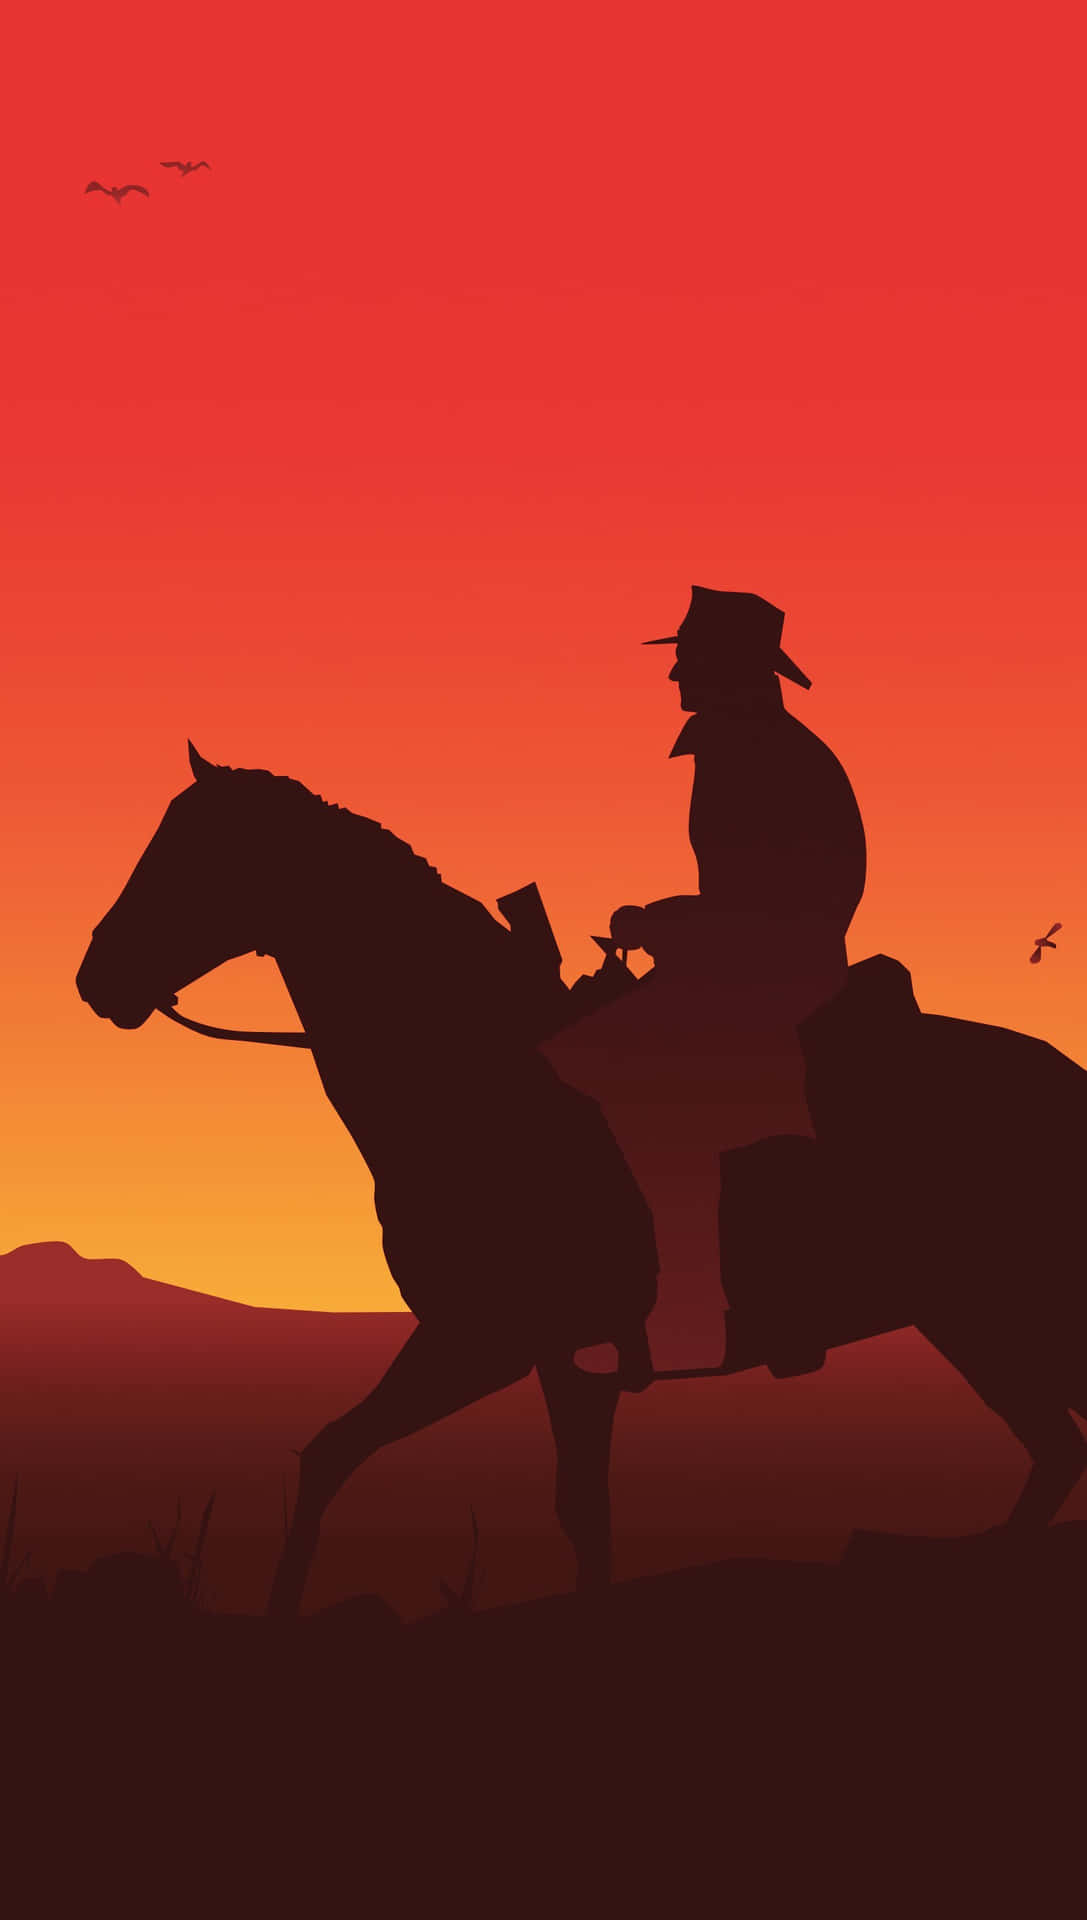 Best Red Dead Redemption 2 Cowboy On A Horse Orange Backdrop Background